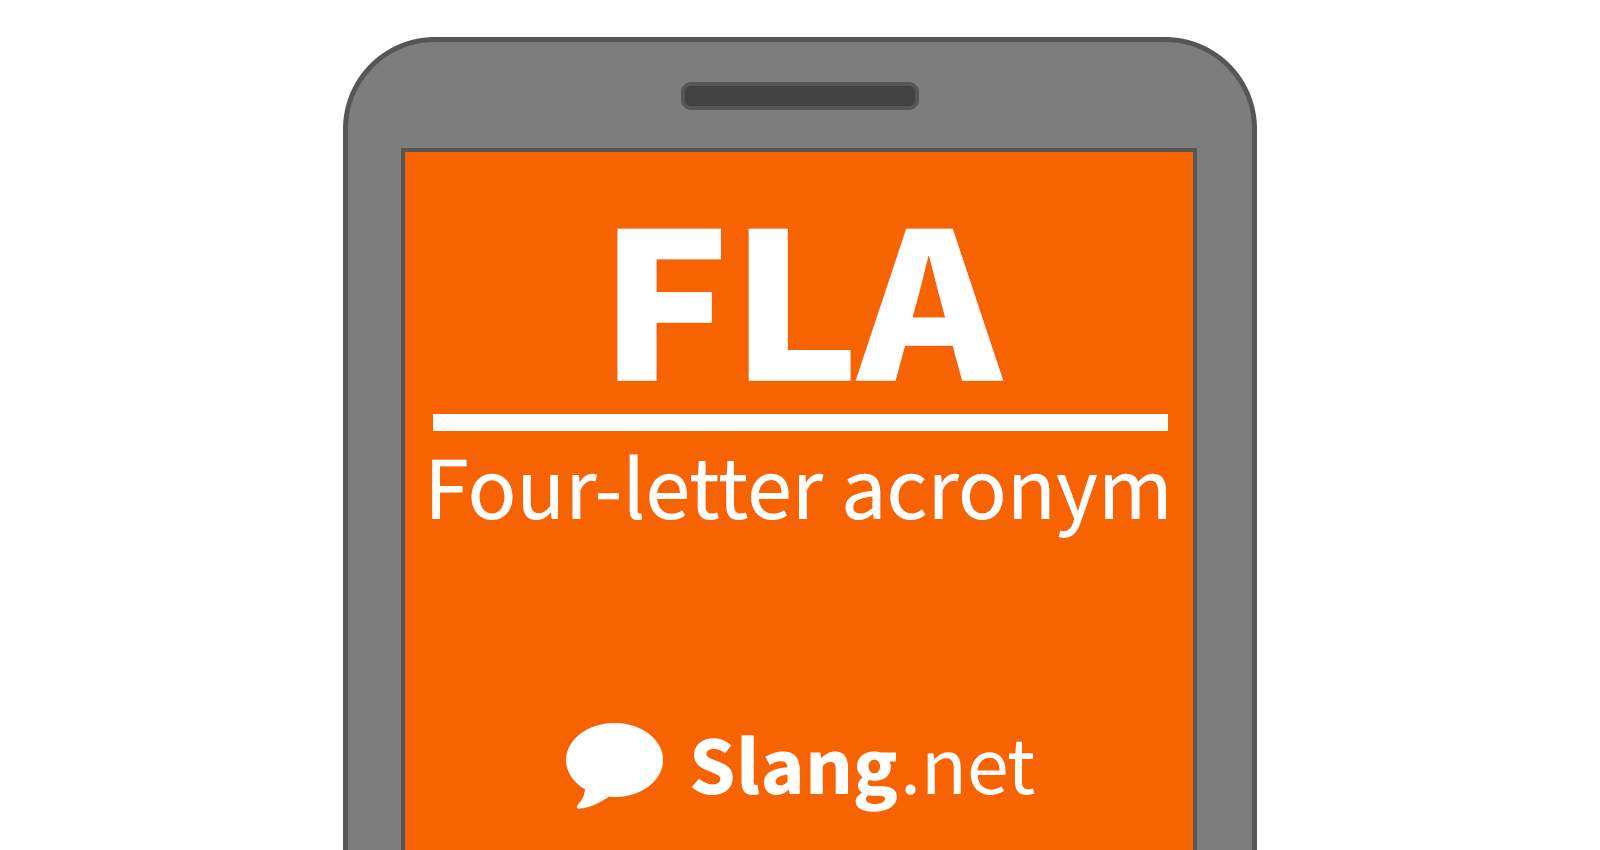 FLA stands for &quot;four-letter acronym&quot;